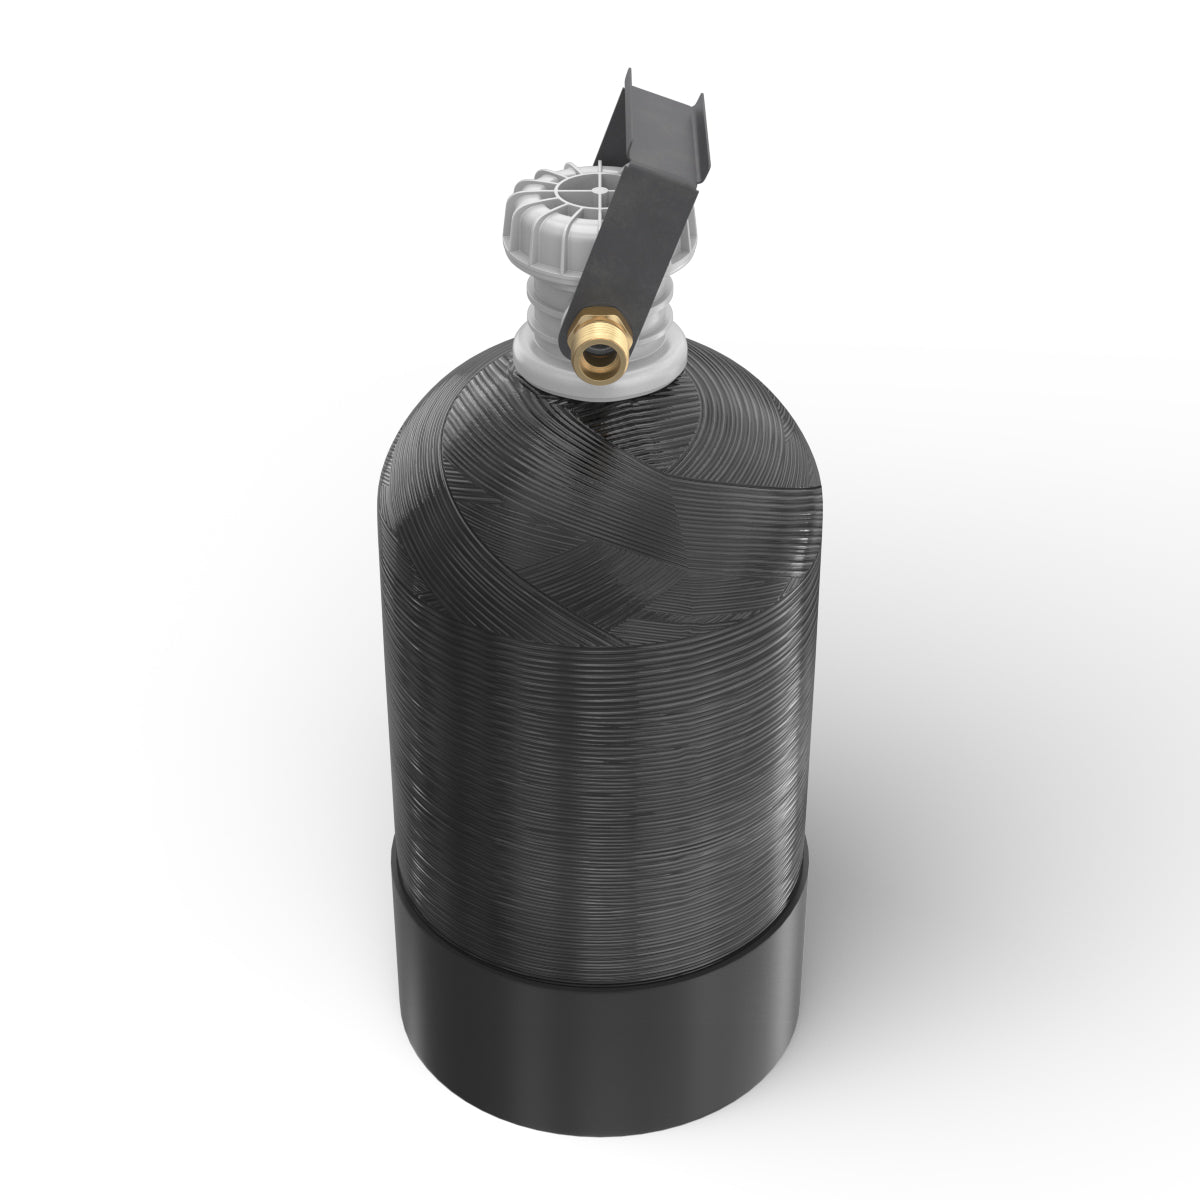 Portable Water Softener (Manual Regeneration) – RV Water USA